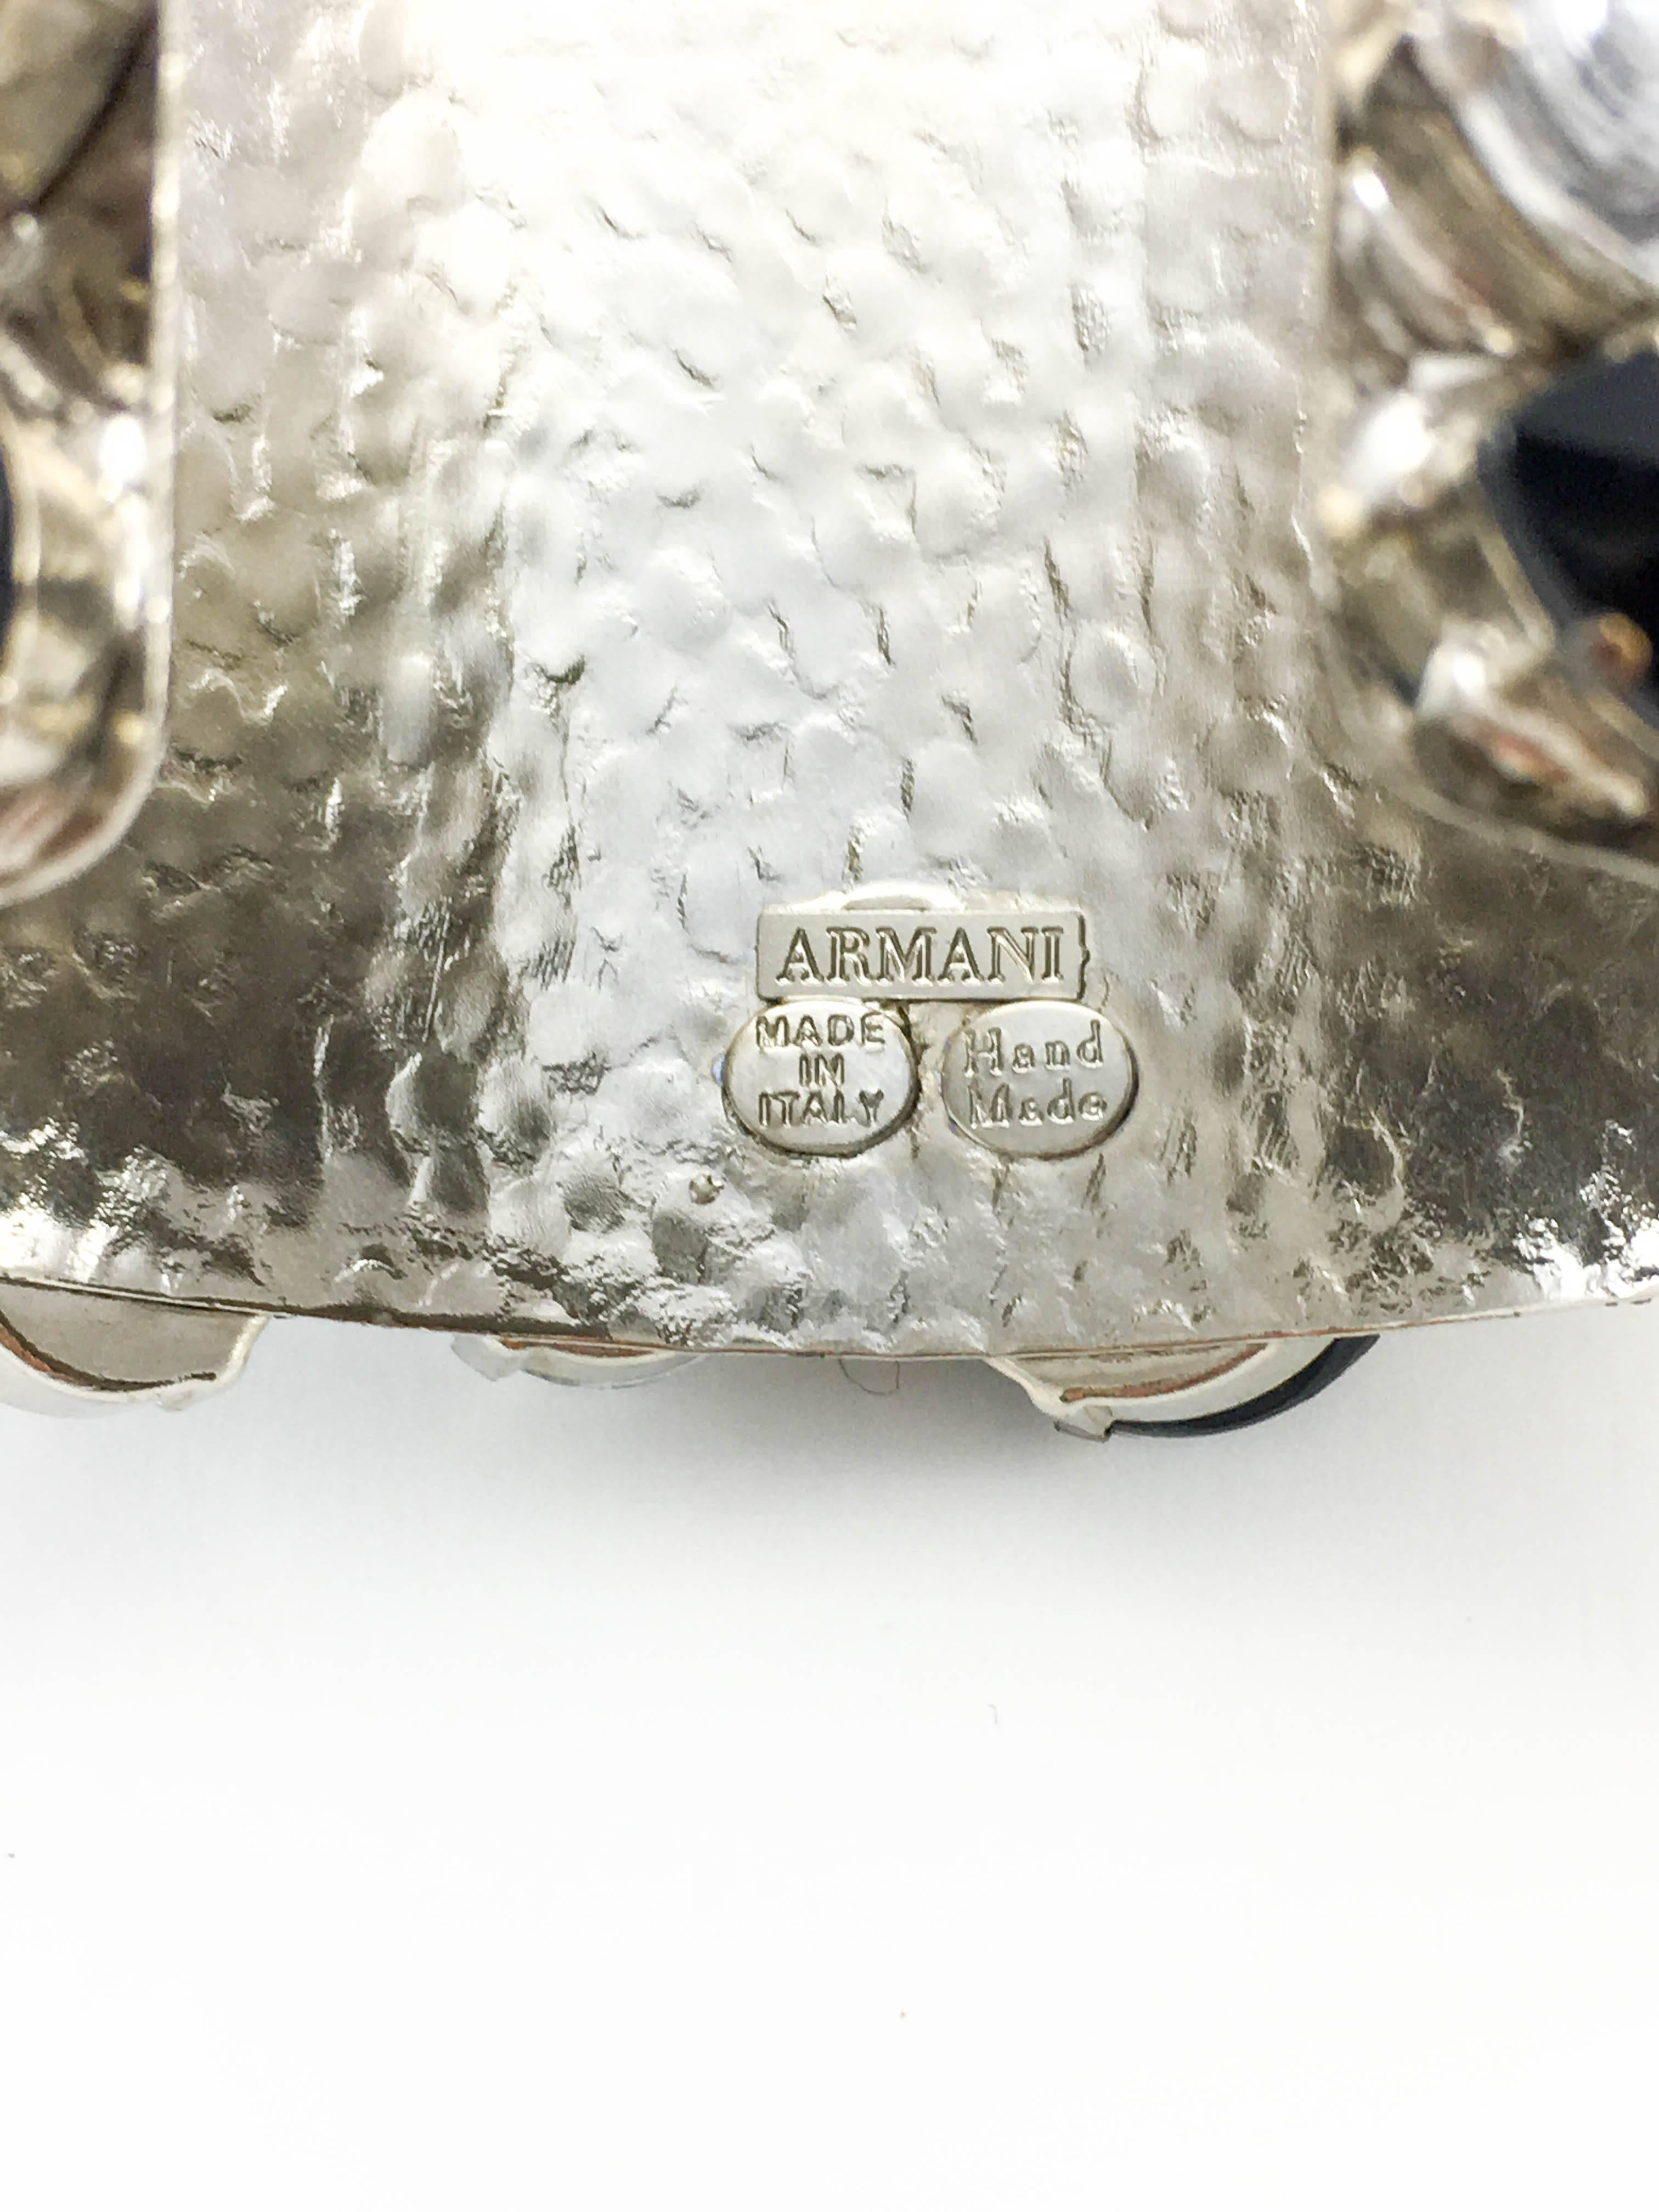 Armani Hand-Made Black Glass and Crystal Cuff Bracelet - 21st Century 3